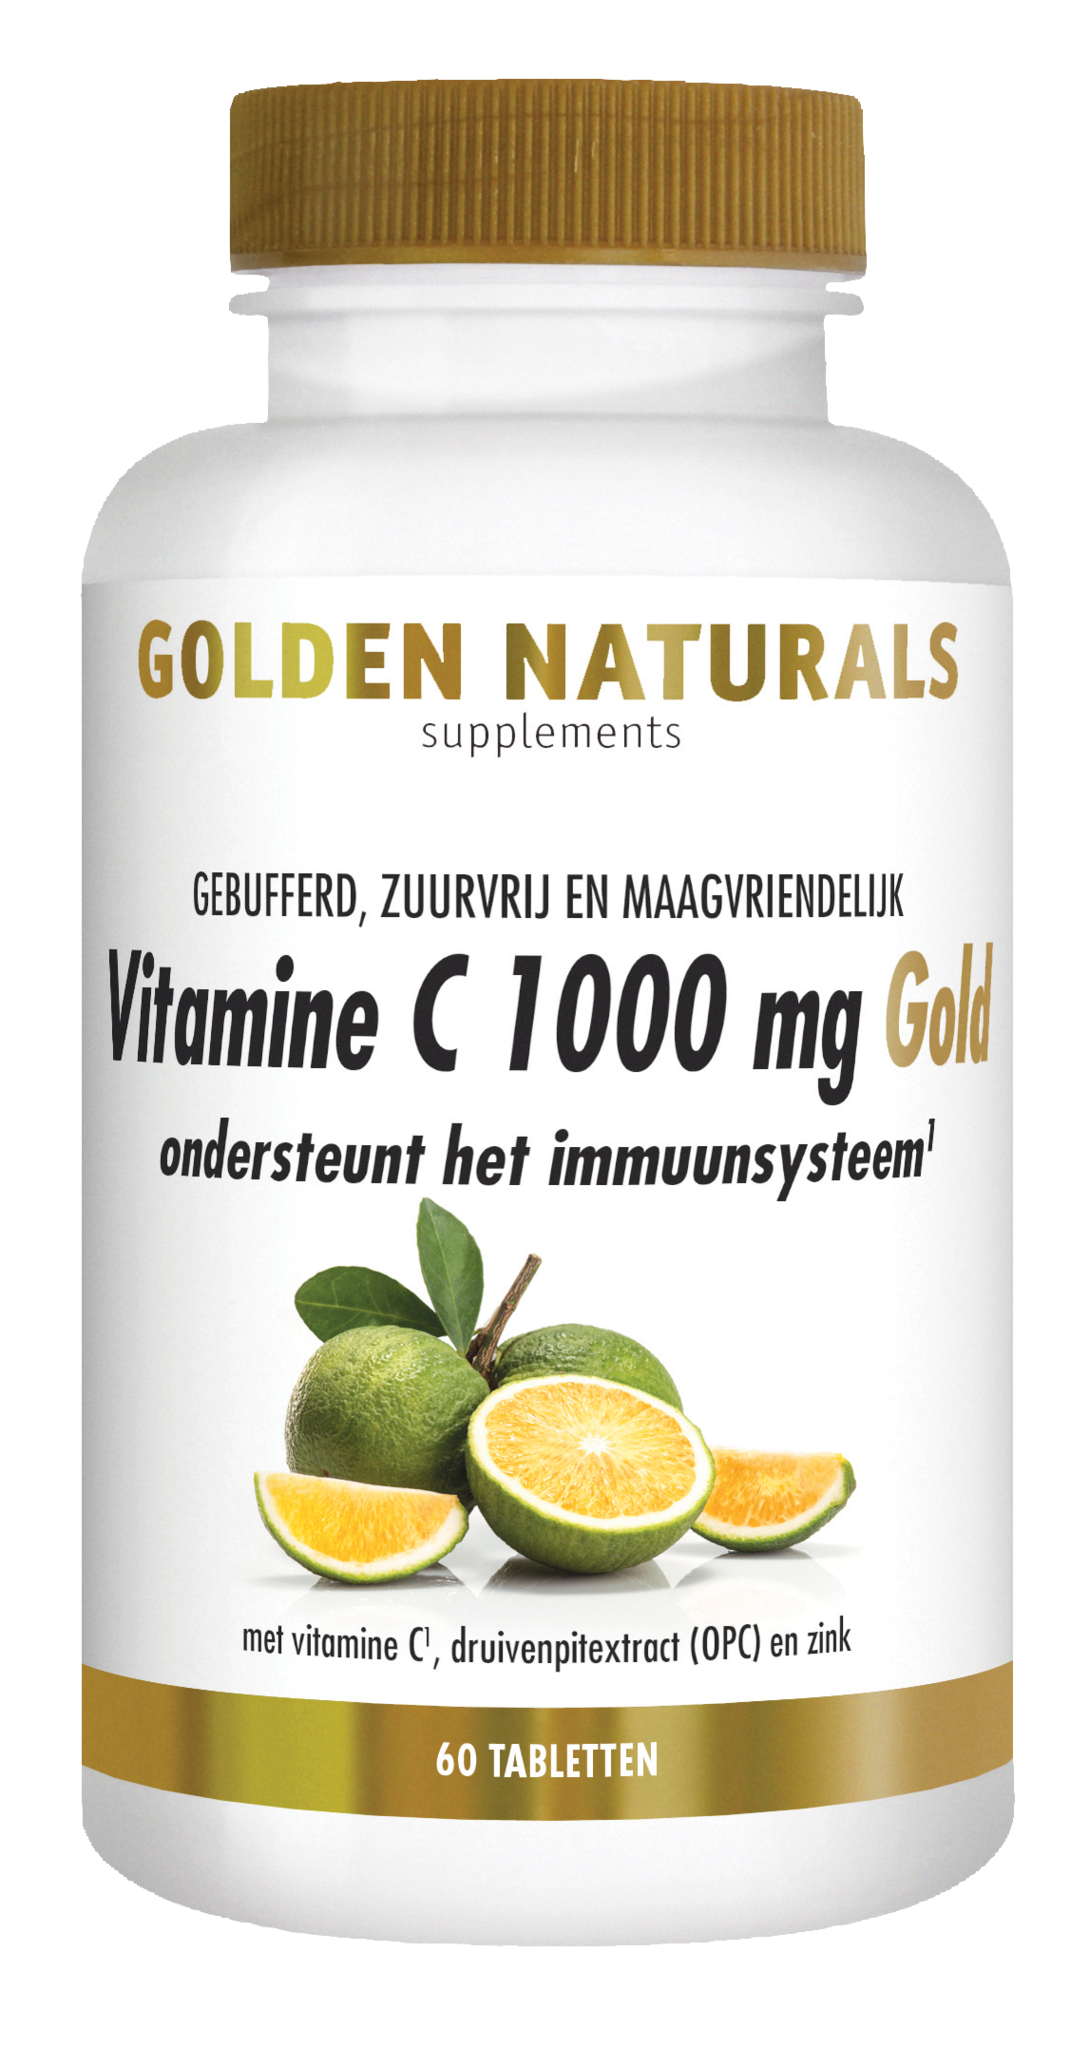 Golden Naturals Golden Naturals Vitamin C 1000 mg Gold (60 Tabletten)